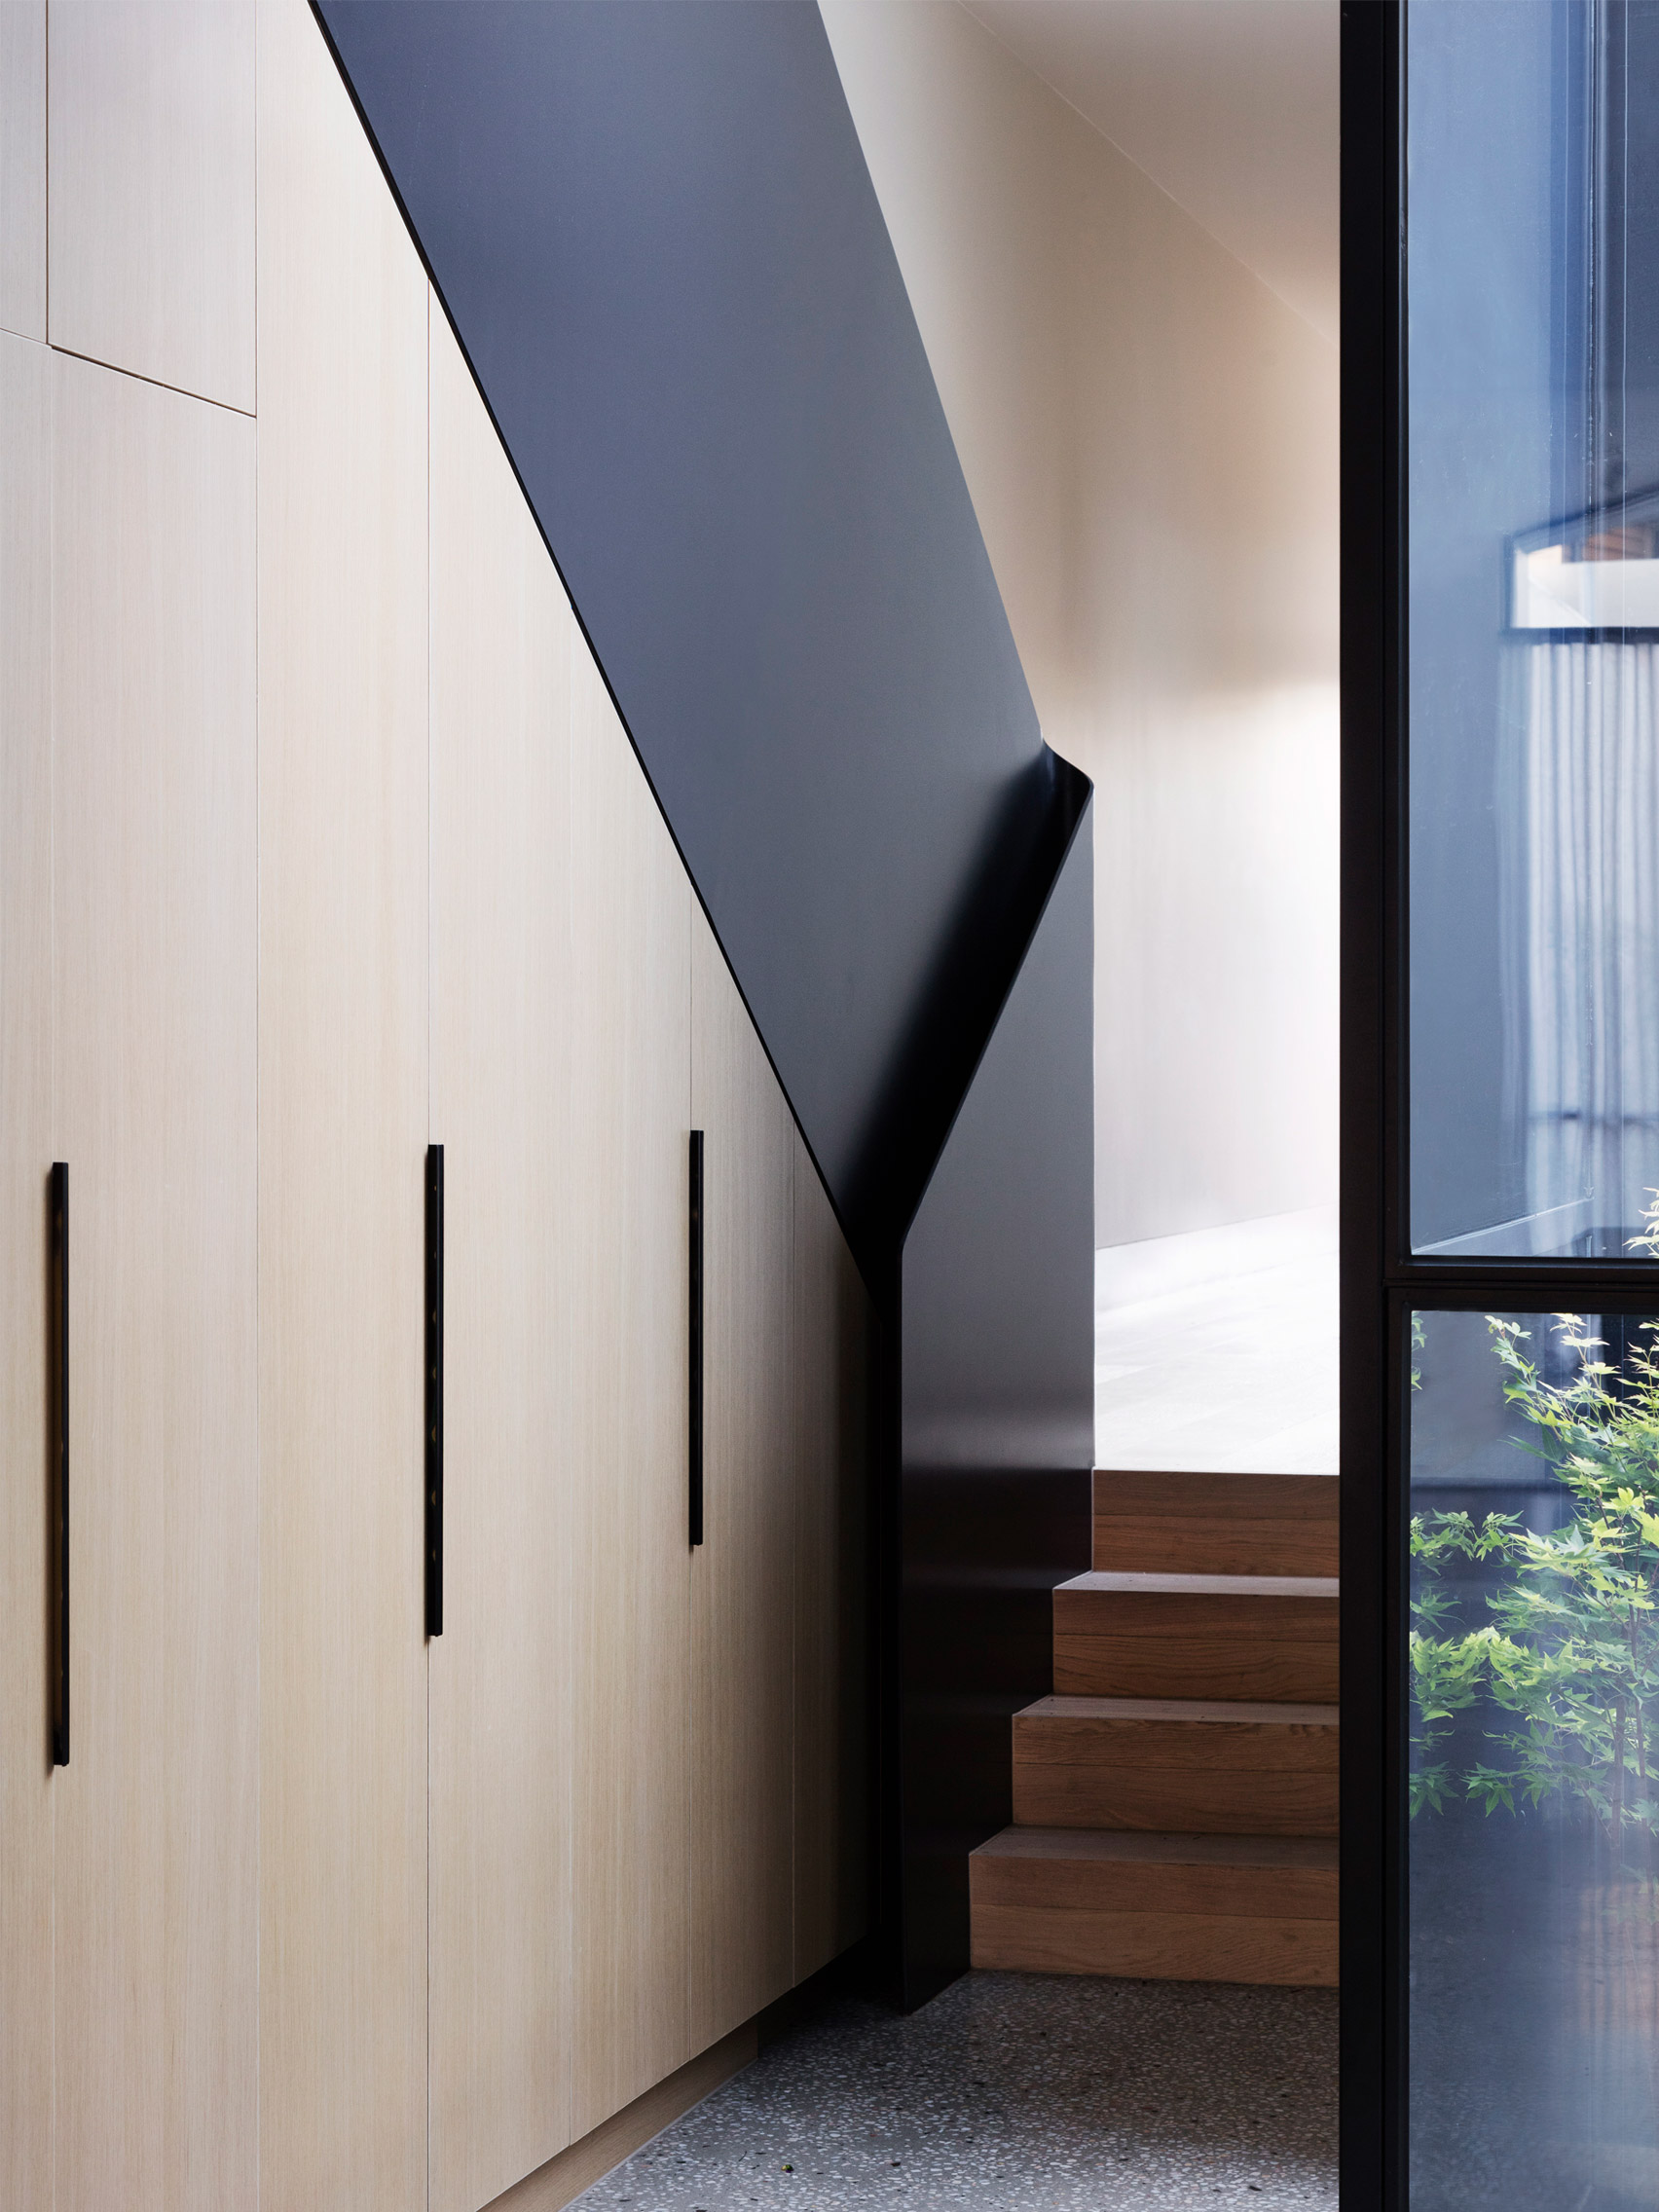 Port Melbourne House by Pandolfini Architects